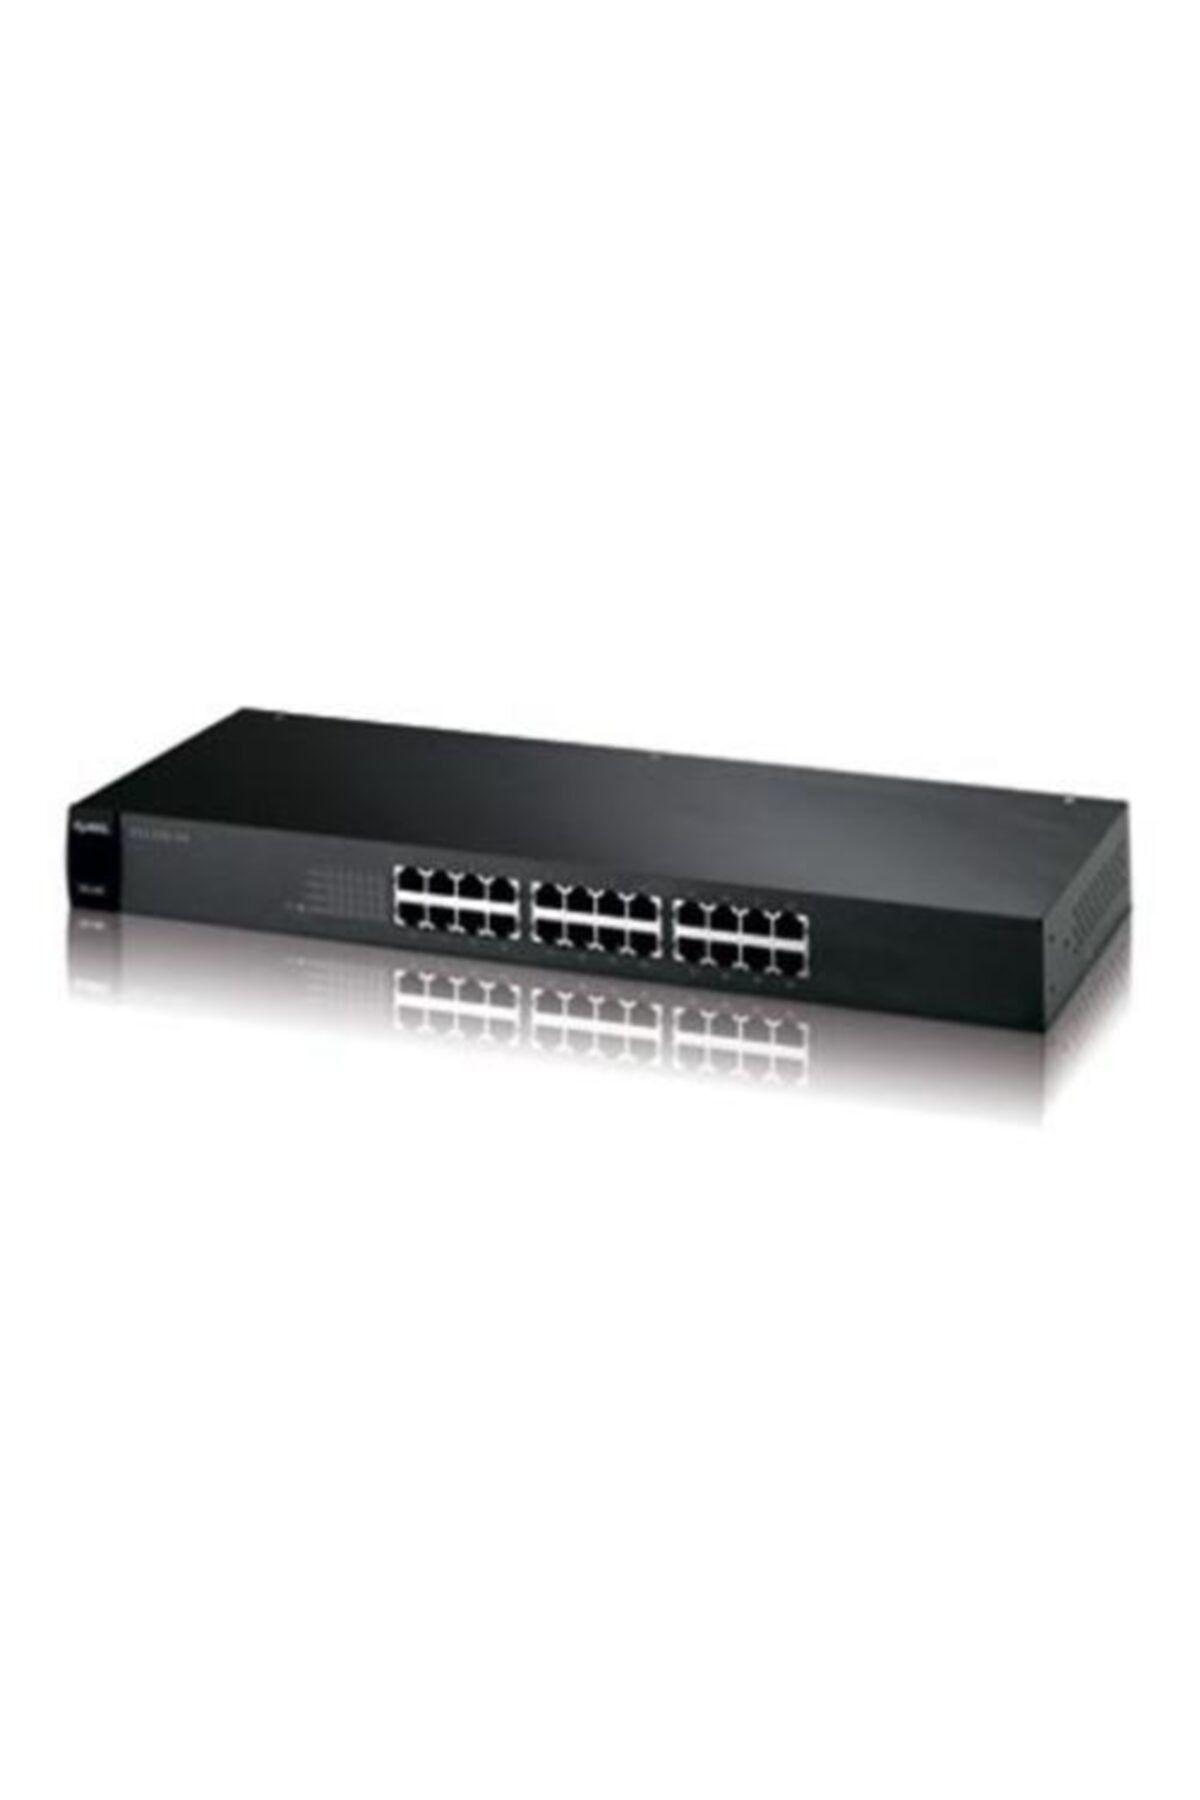 Zyxel Es1100-24e 24 Port 10-100 Mbps Switch Hub